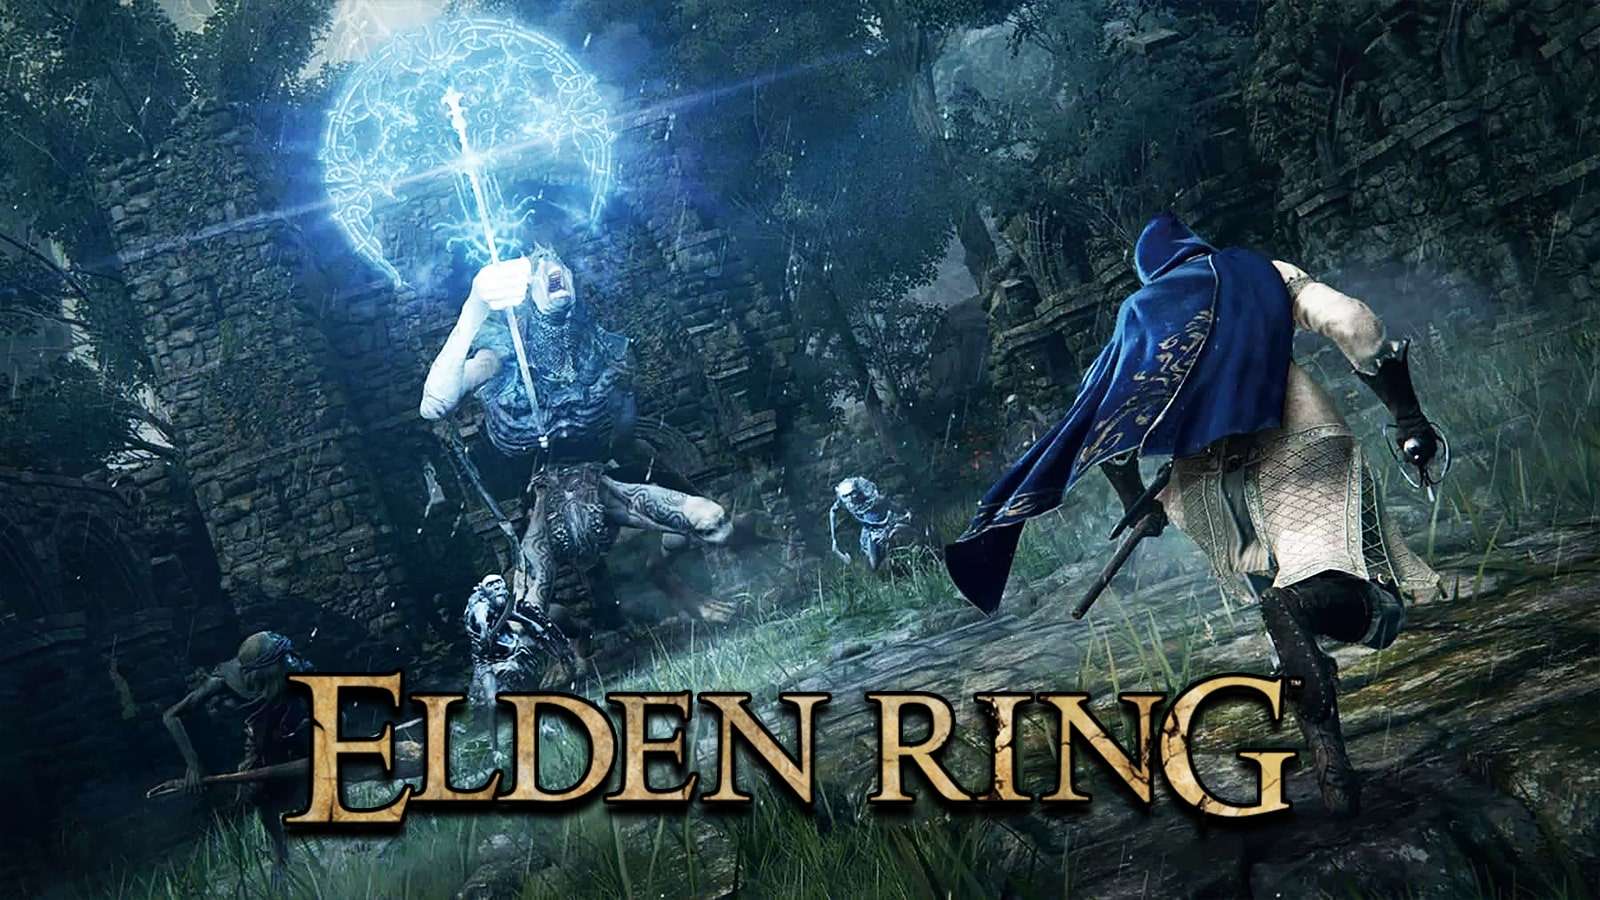 Elden Ring summons boss fight encounter screenshot.